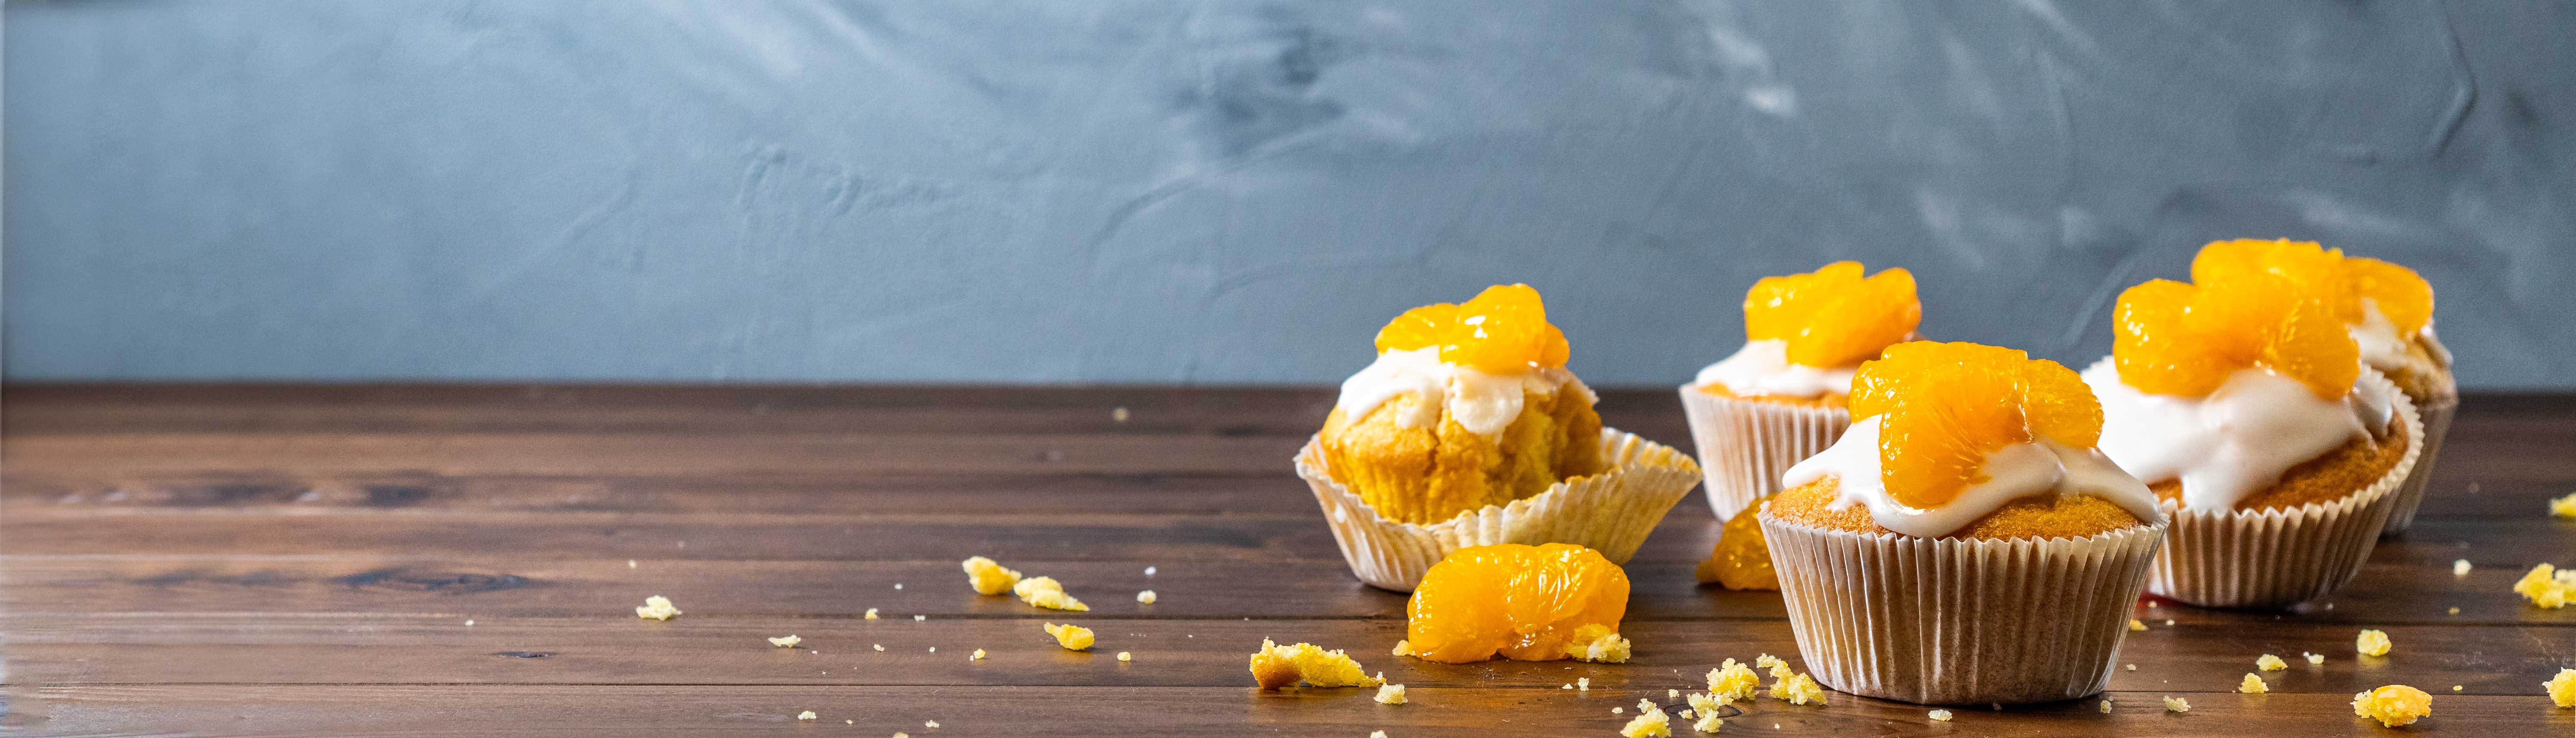 Zitronen-Mandarinen-Muffins – RUF Lebensmittel